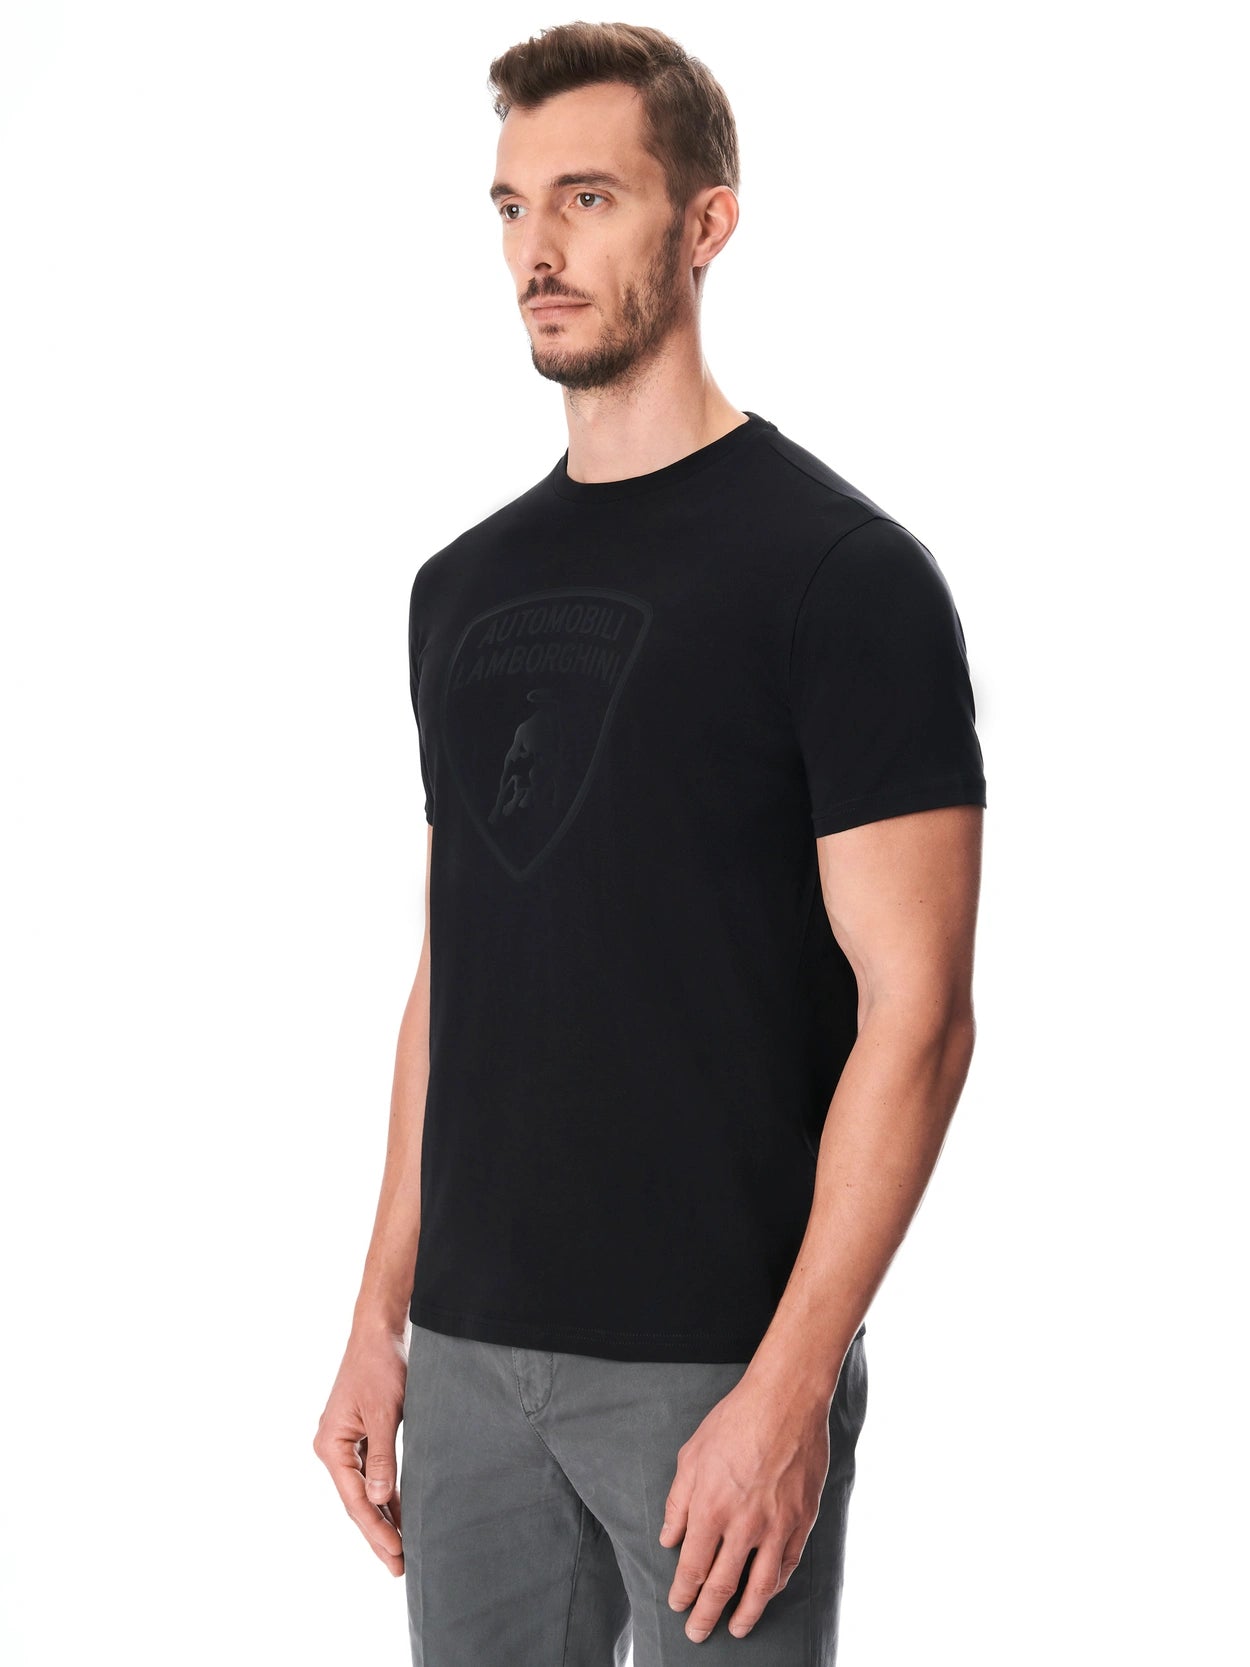 Automobili Lamborghini Iconic Big Shield Men's Crew Neck T-shirt - Black